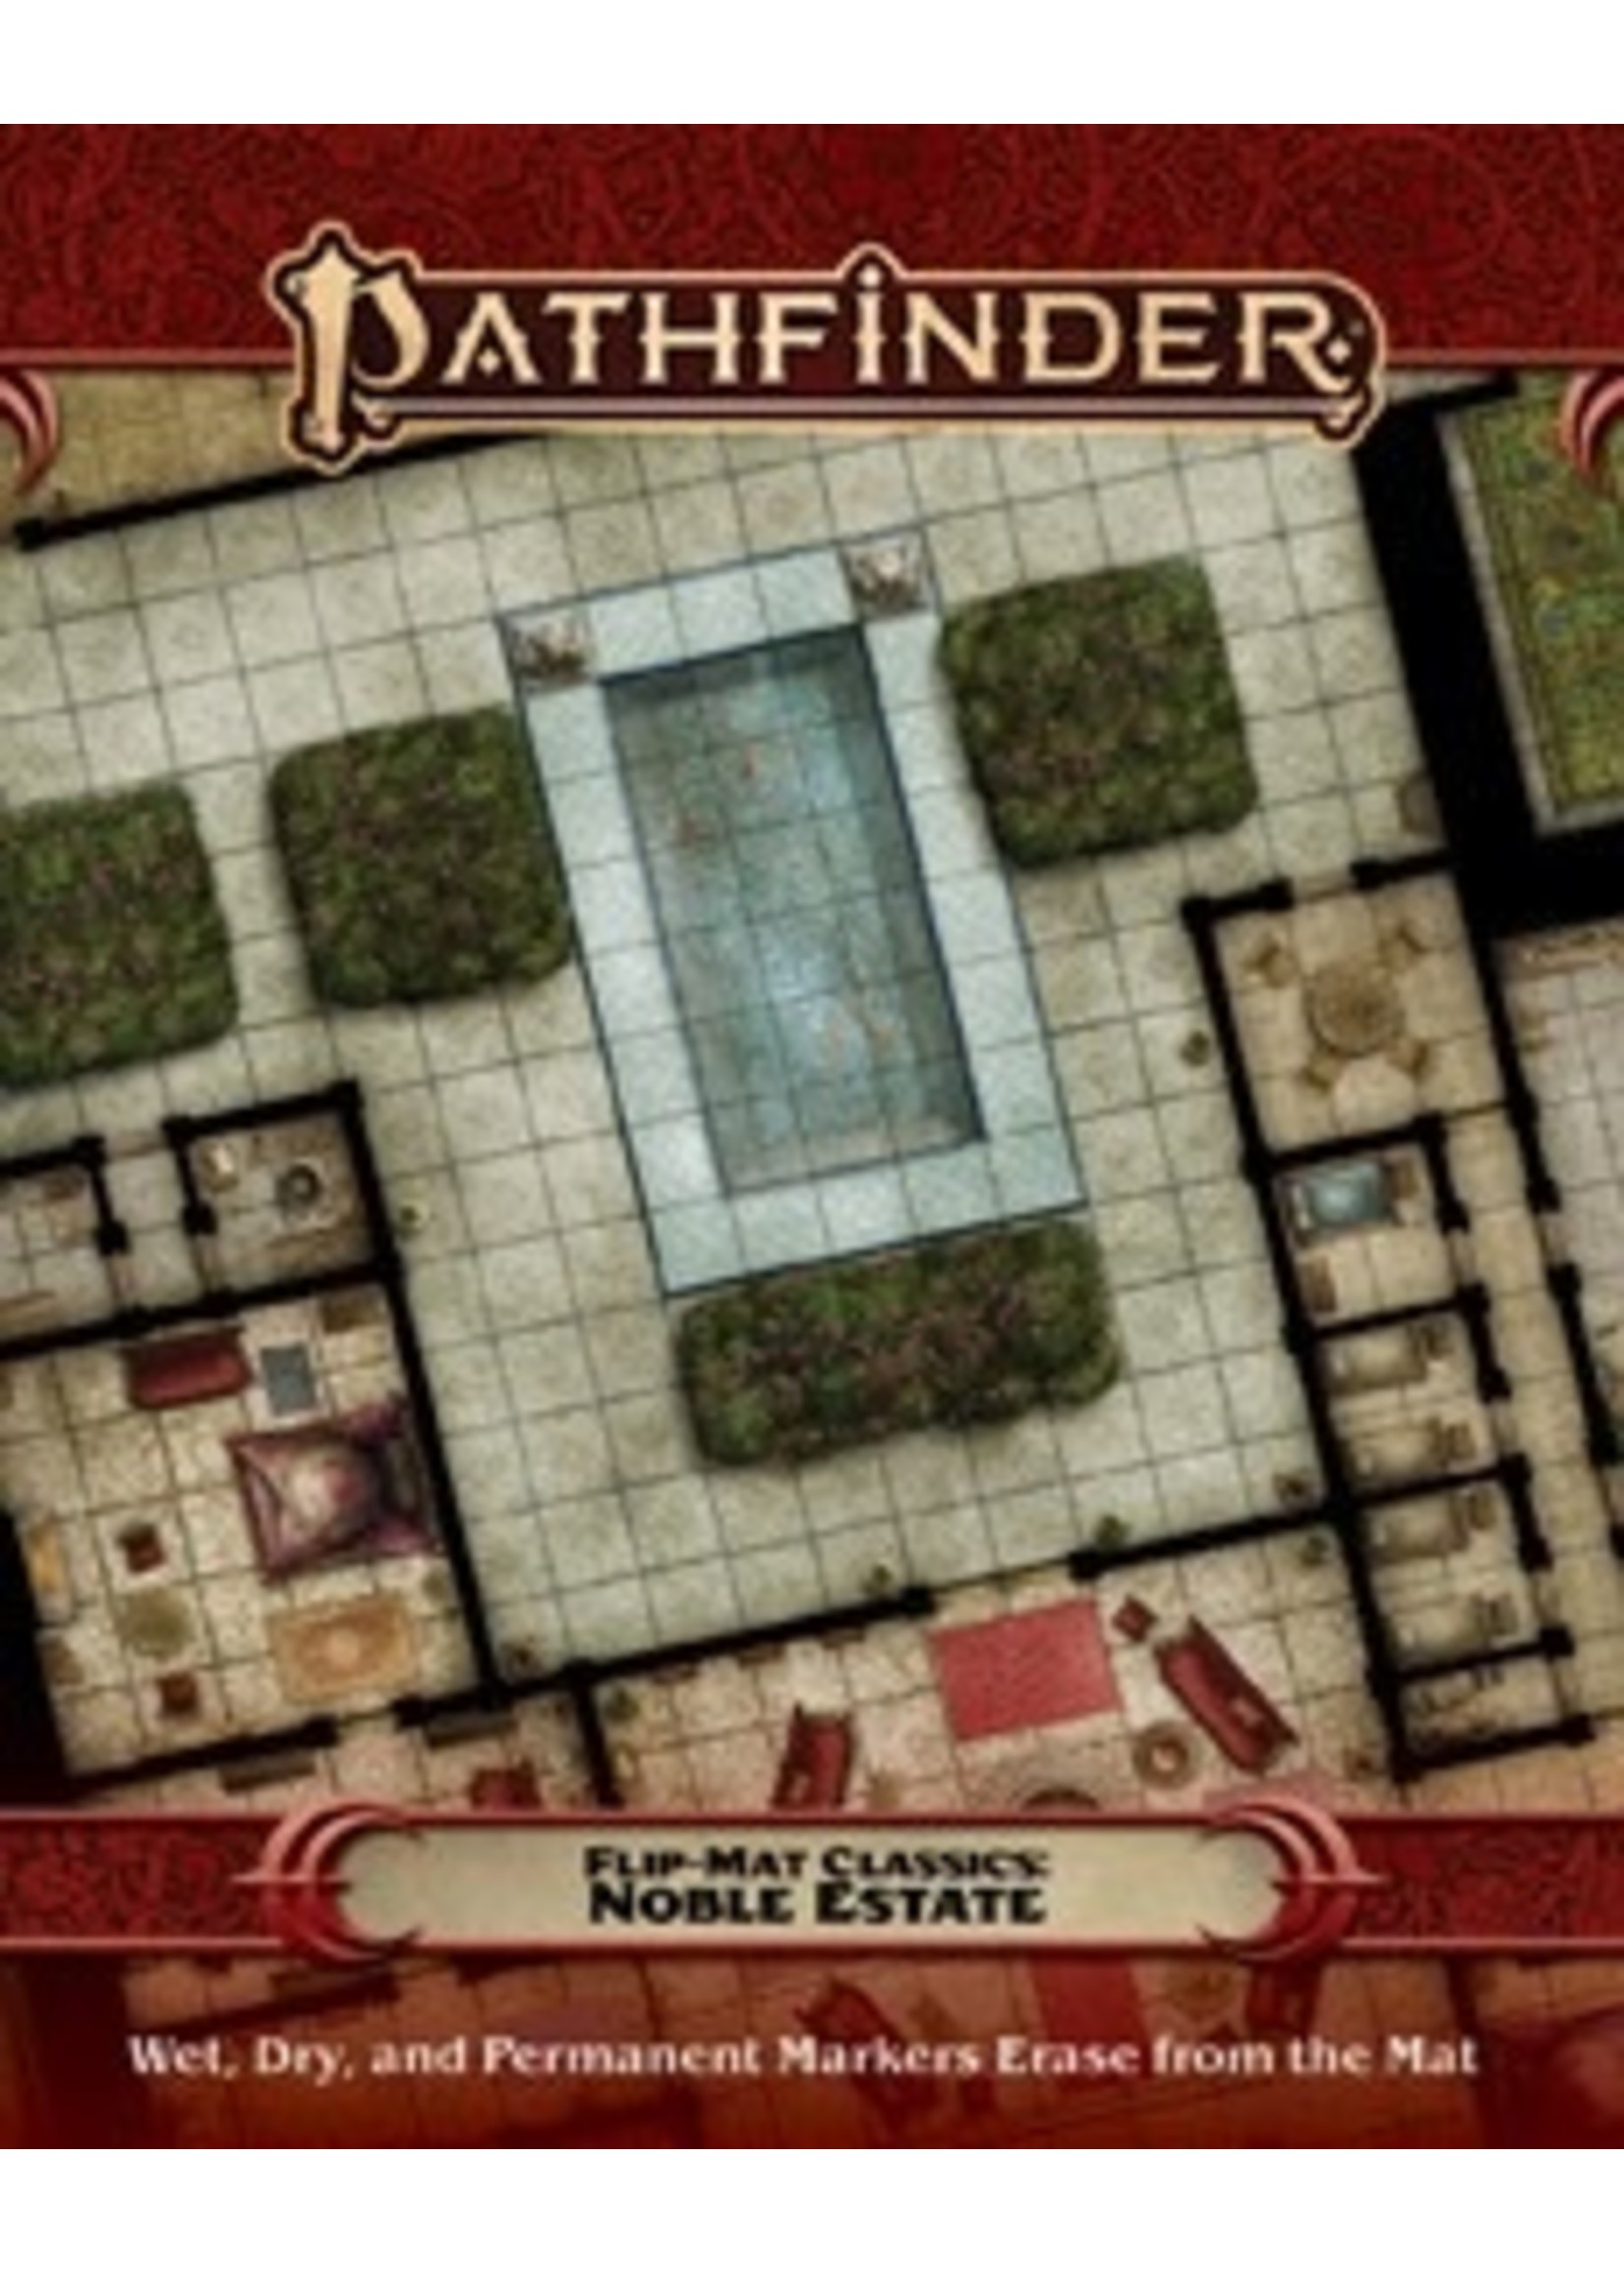 PAIZO Pathfinder RPG: Flip-Mat Classics - Noble Estate